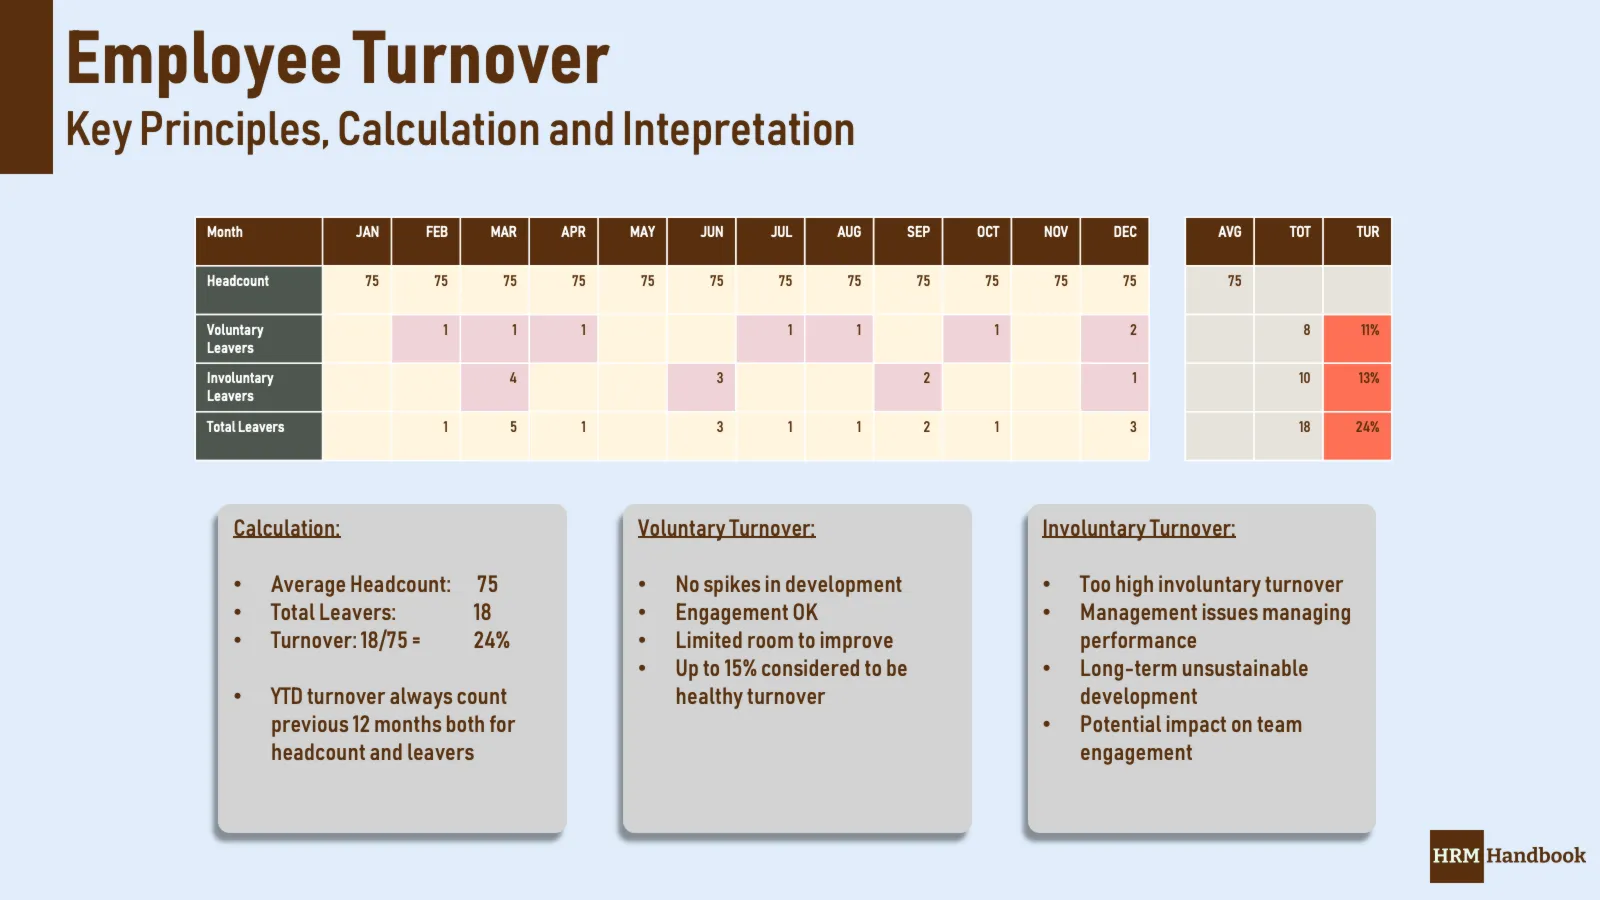 Employee Turnover: Definition, Calculation, Interpretation and Usage